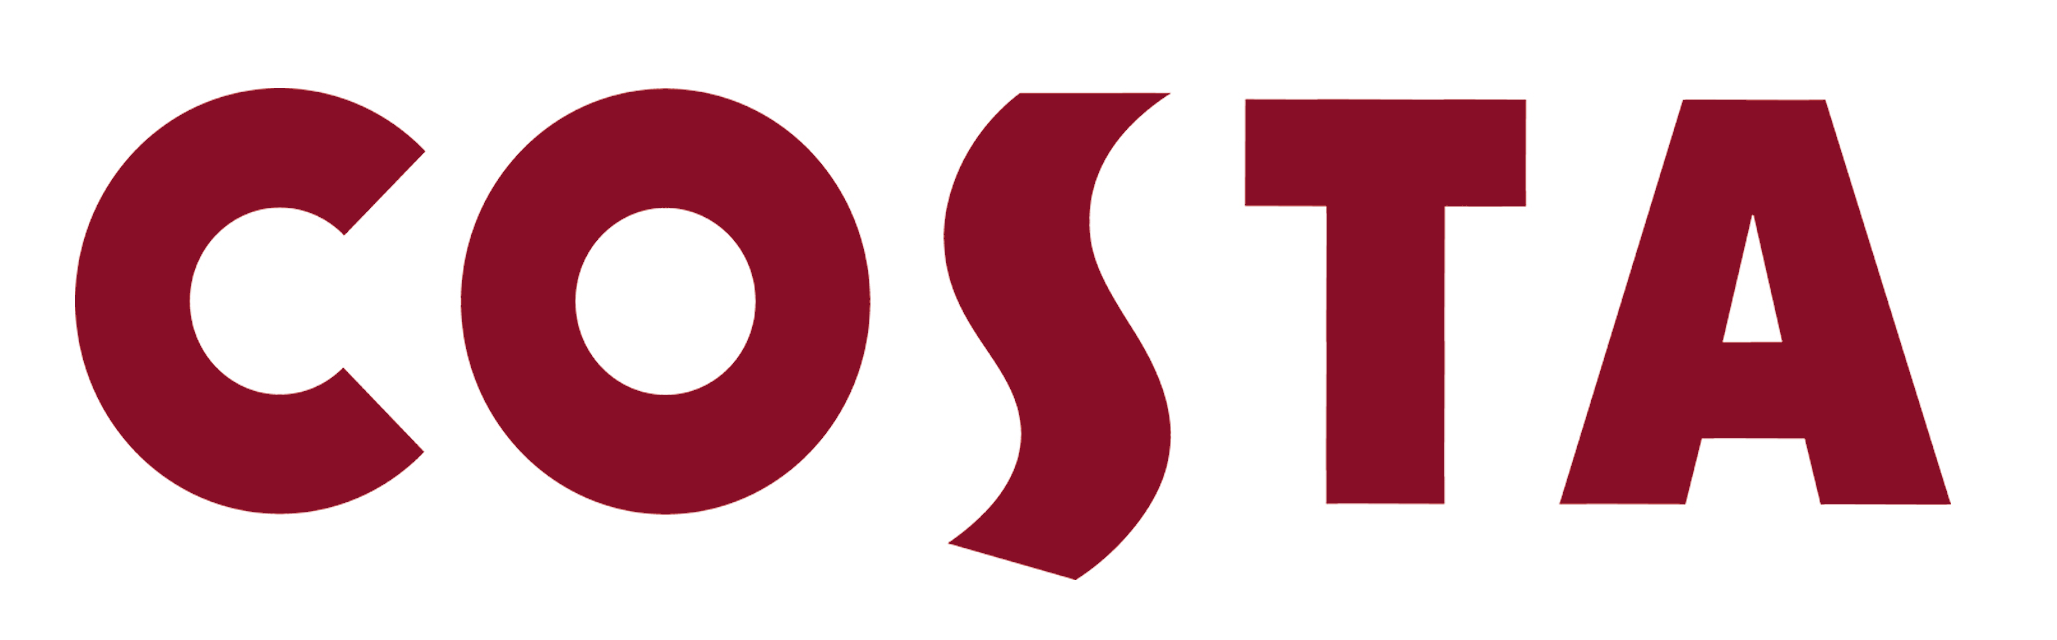 1557914491108-Costa_logo.png